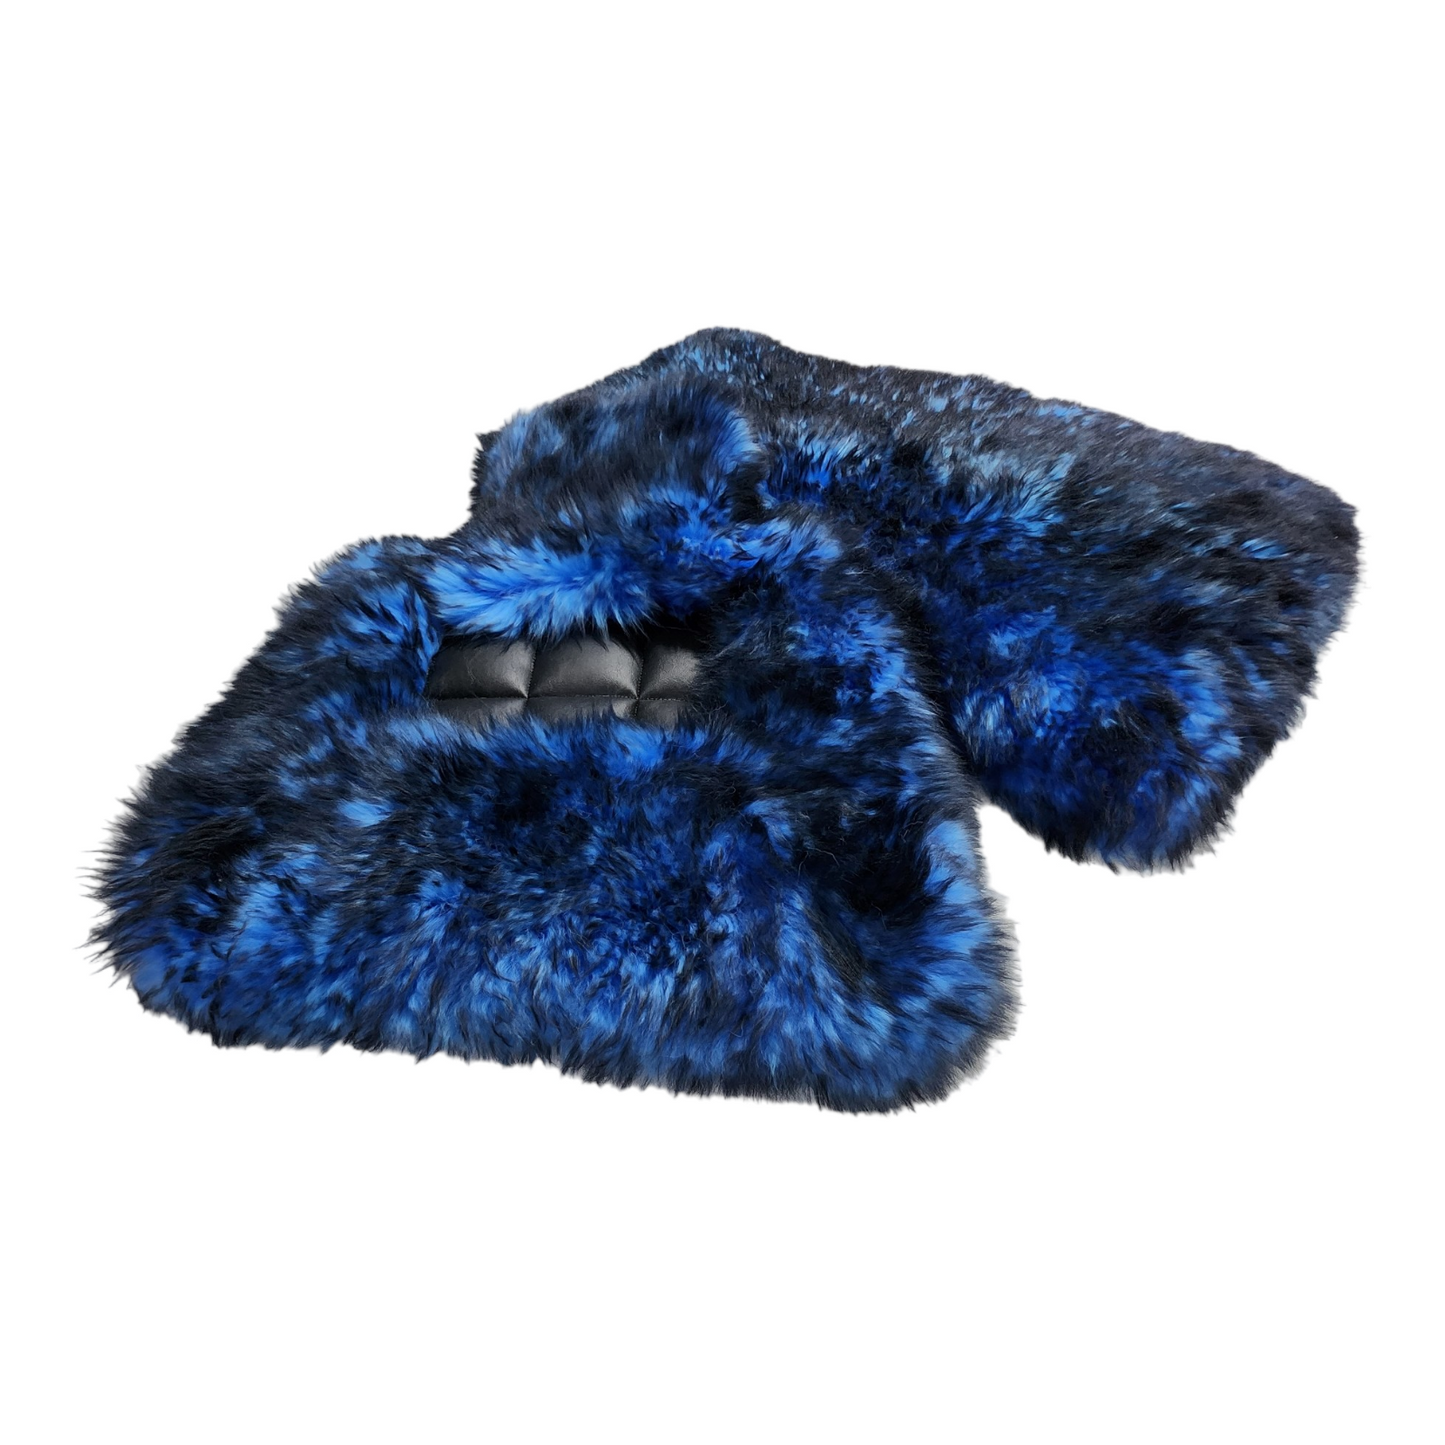 Mogul Mats Multi Color Sheepskin Floor Mats Shown in Blue w/ Black Tips